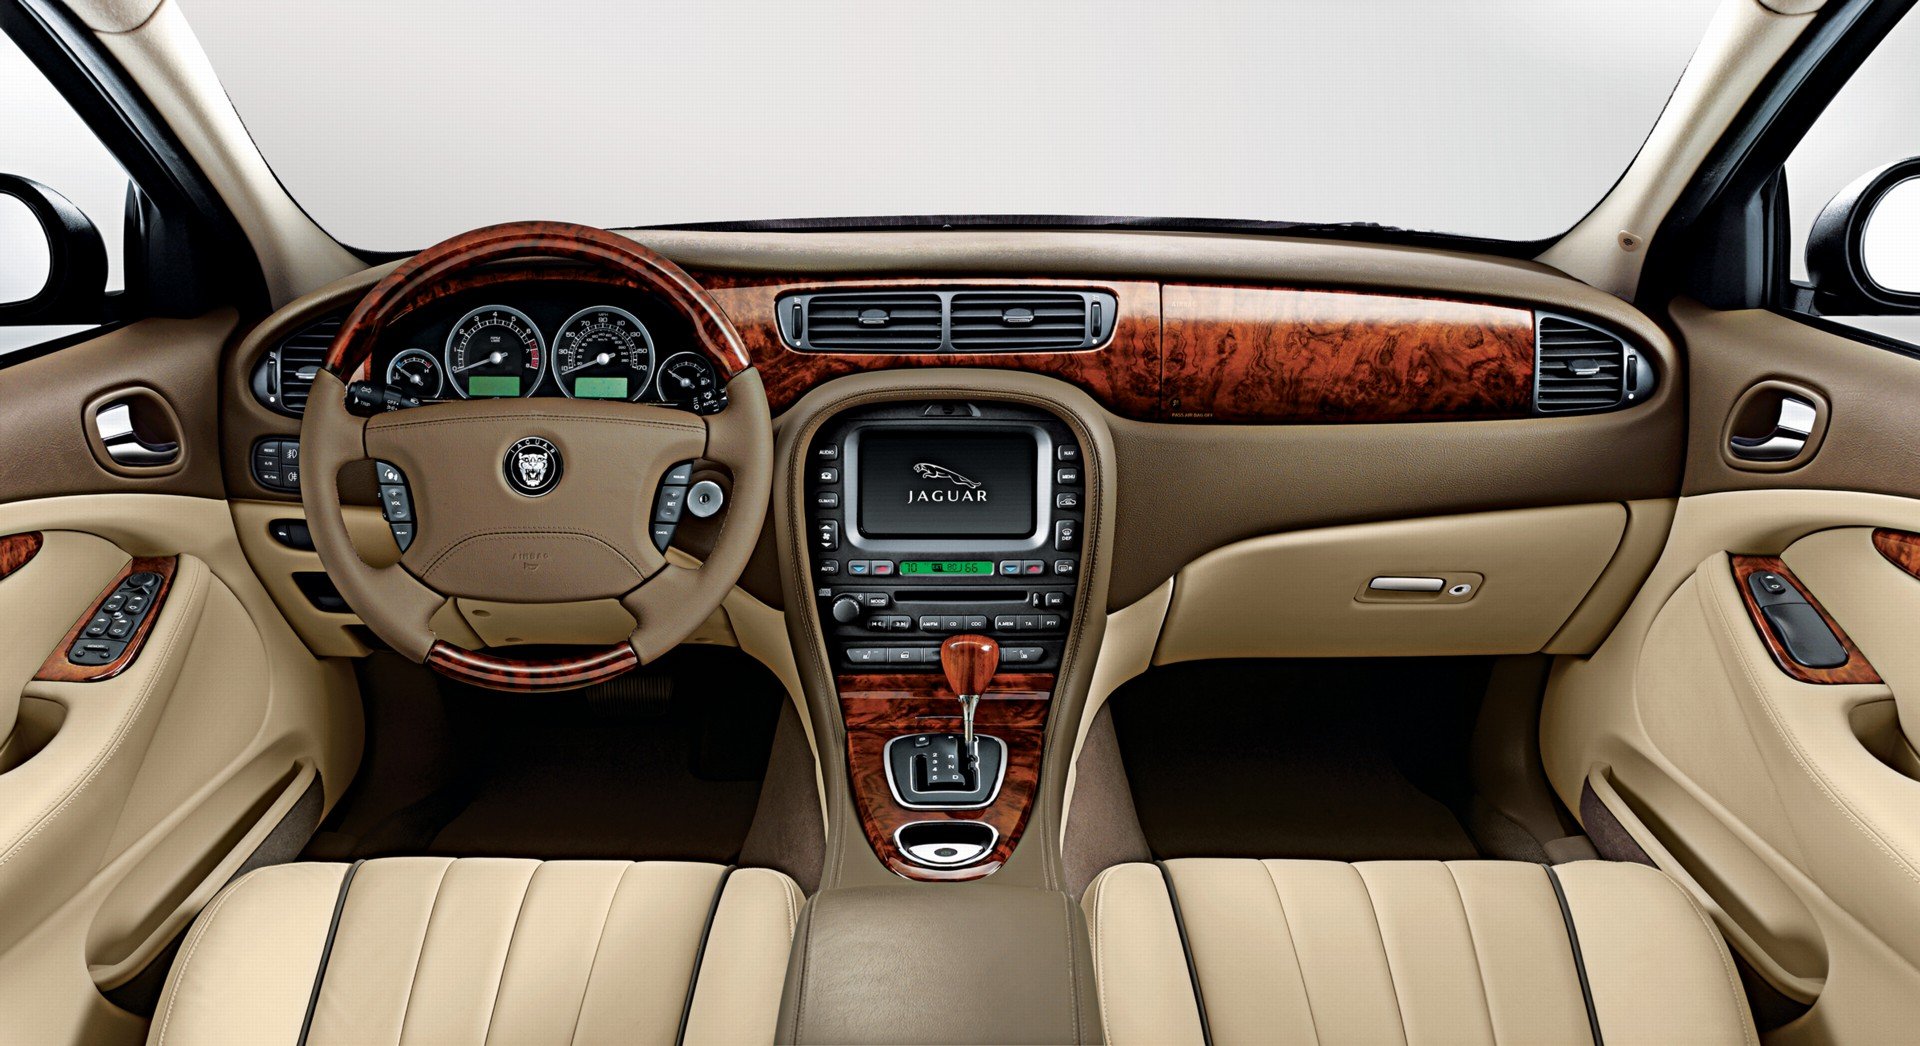 Jaguar S-Type interior - Cockpit